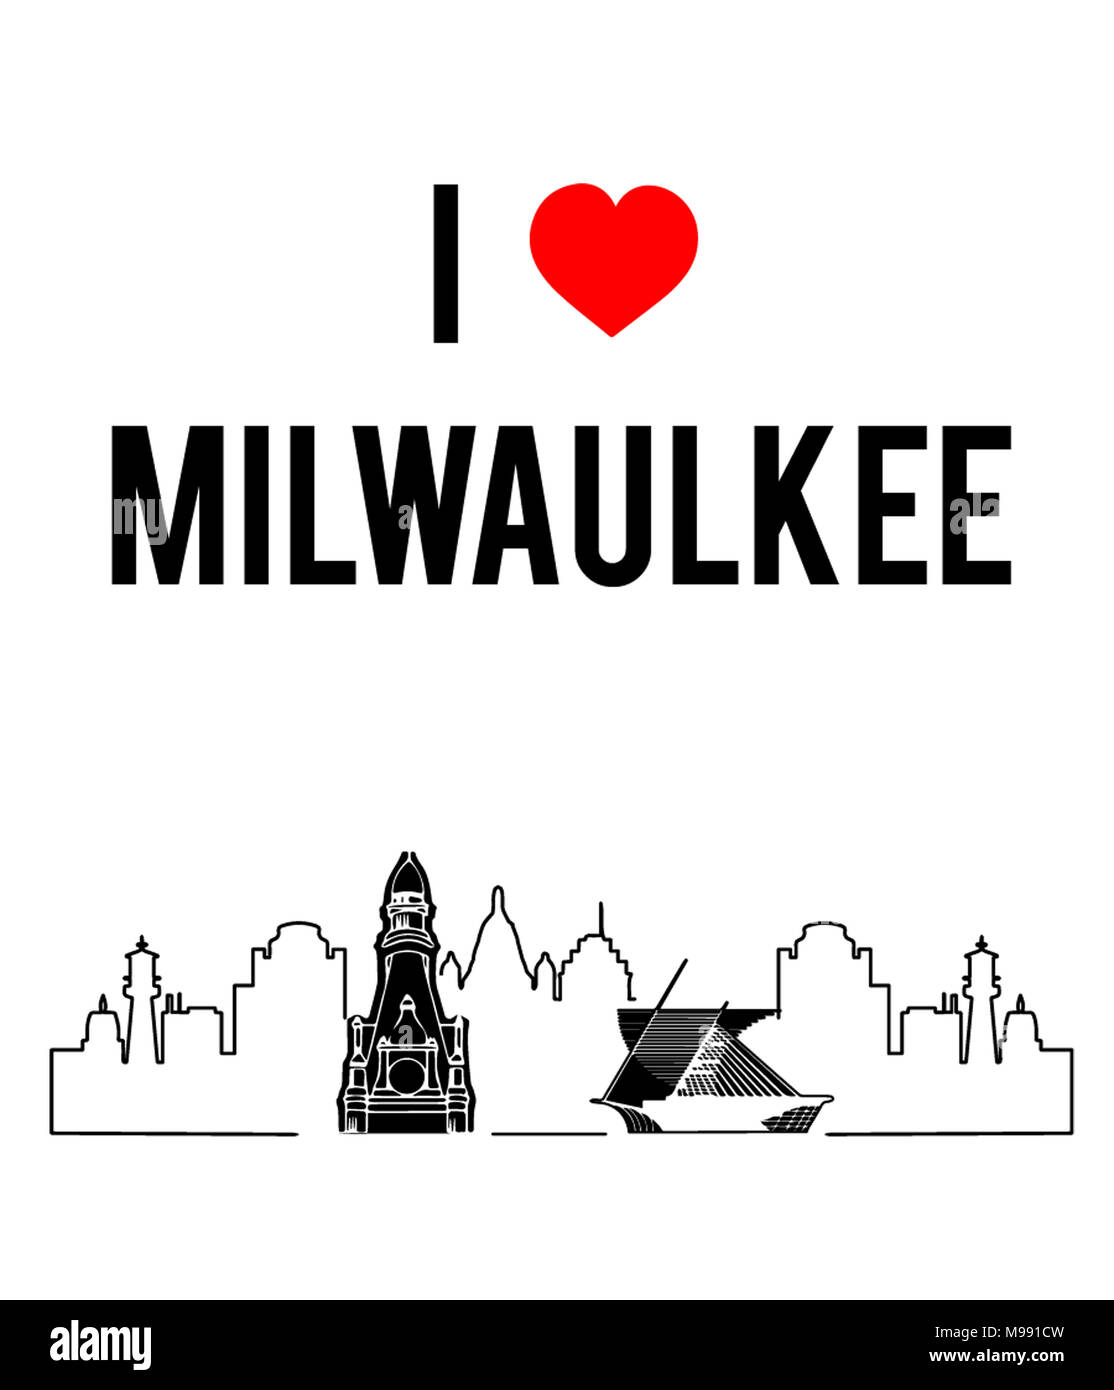 I love Milwaukee Stock Photo